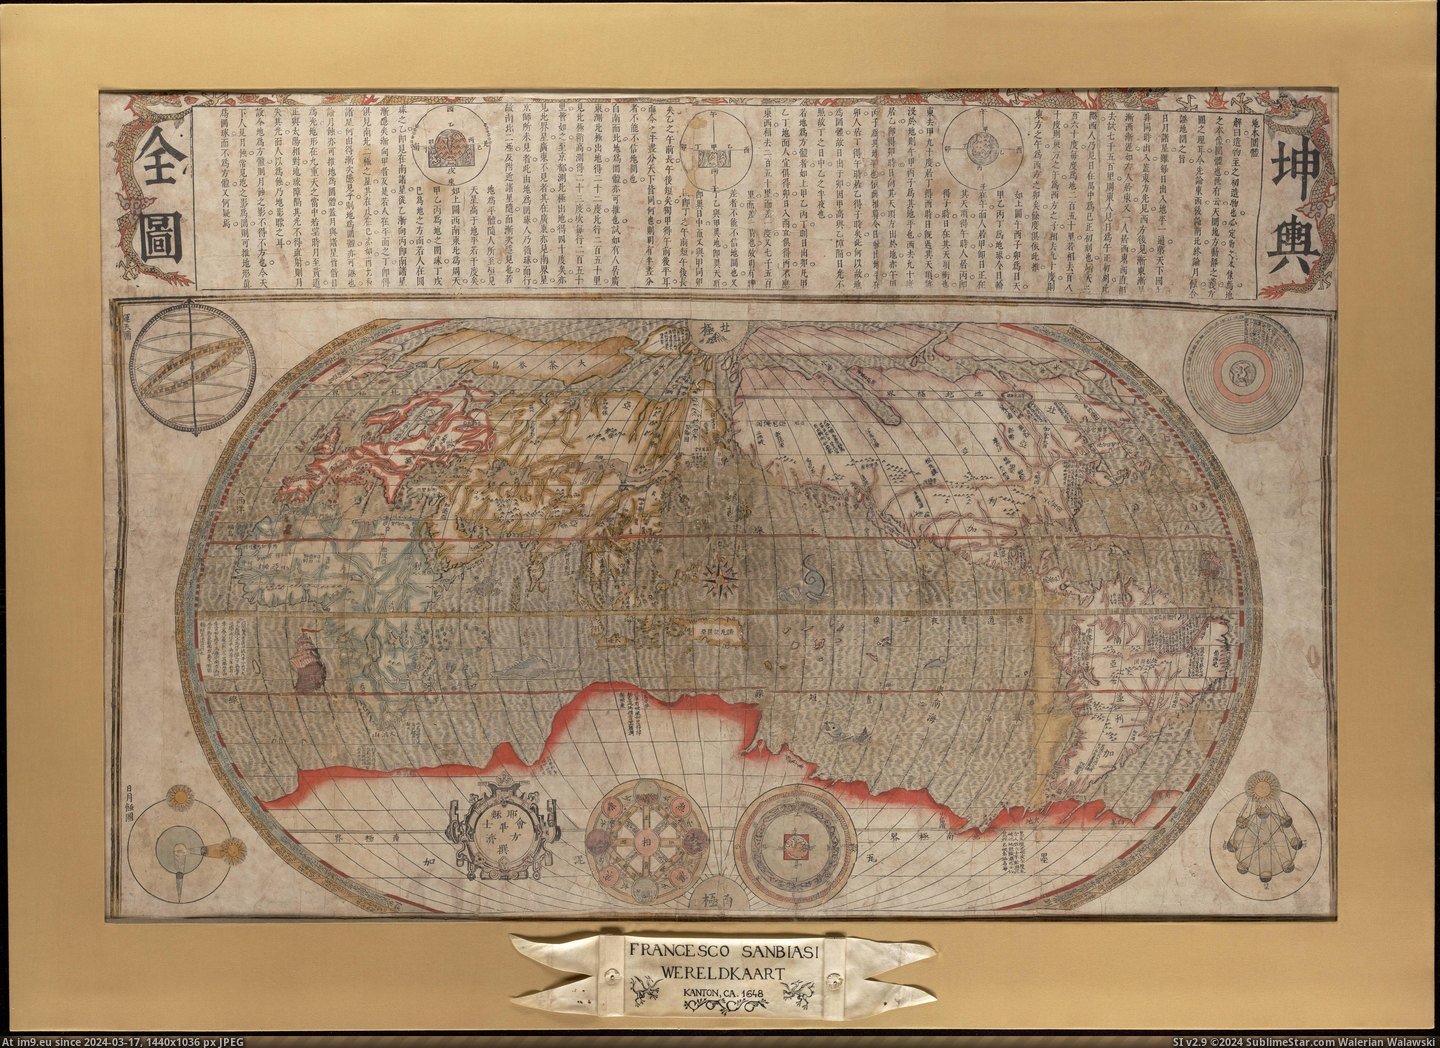 #World #Map #8682x6269 #Sanbiasi #Chinese #Francesco [Mapporn] Chinese World map, 1648, By Francesco Sanbiasi [8682x6269] Pic. (Image of album My r/MAPS favs))